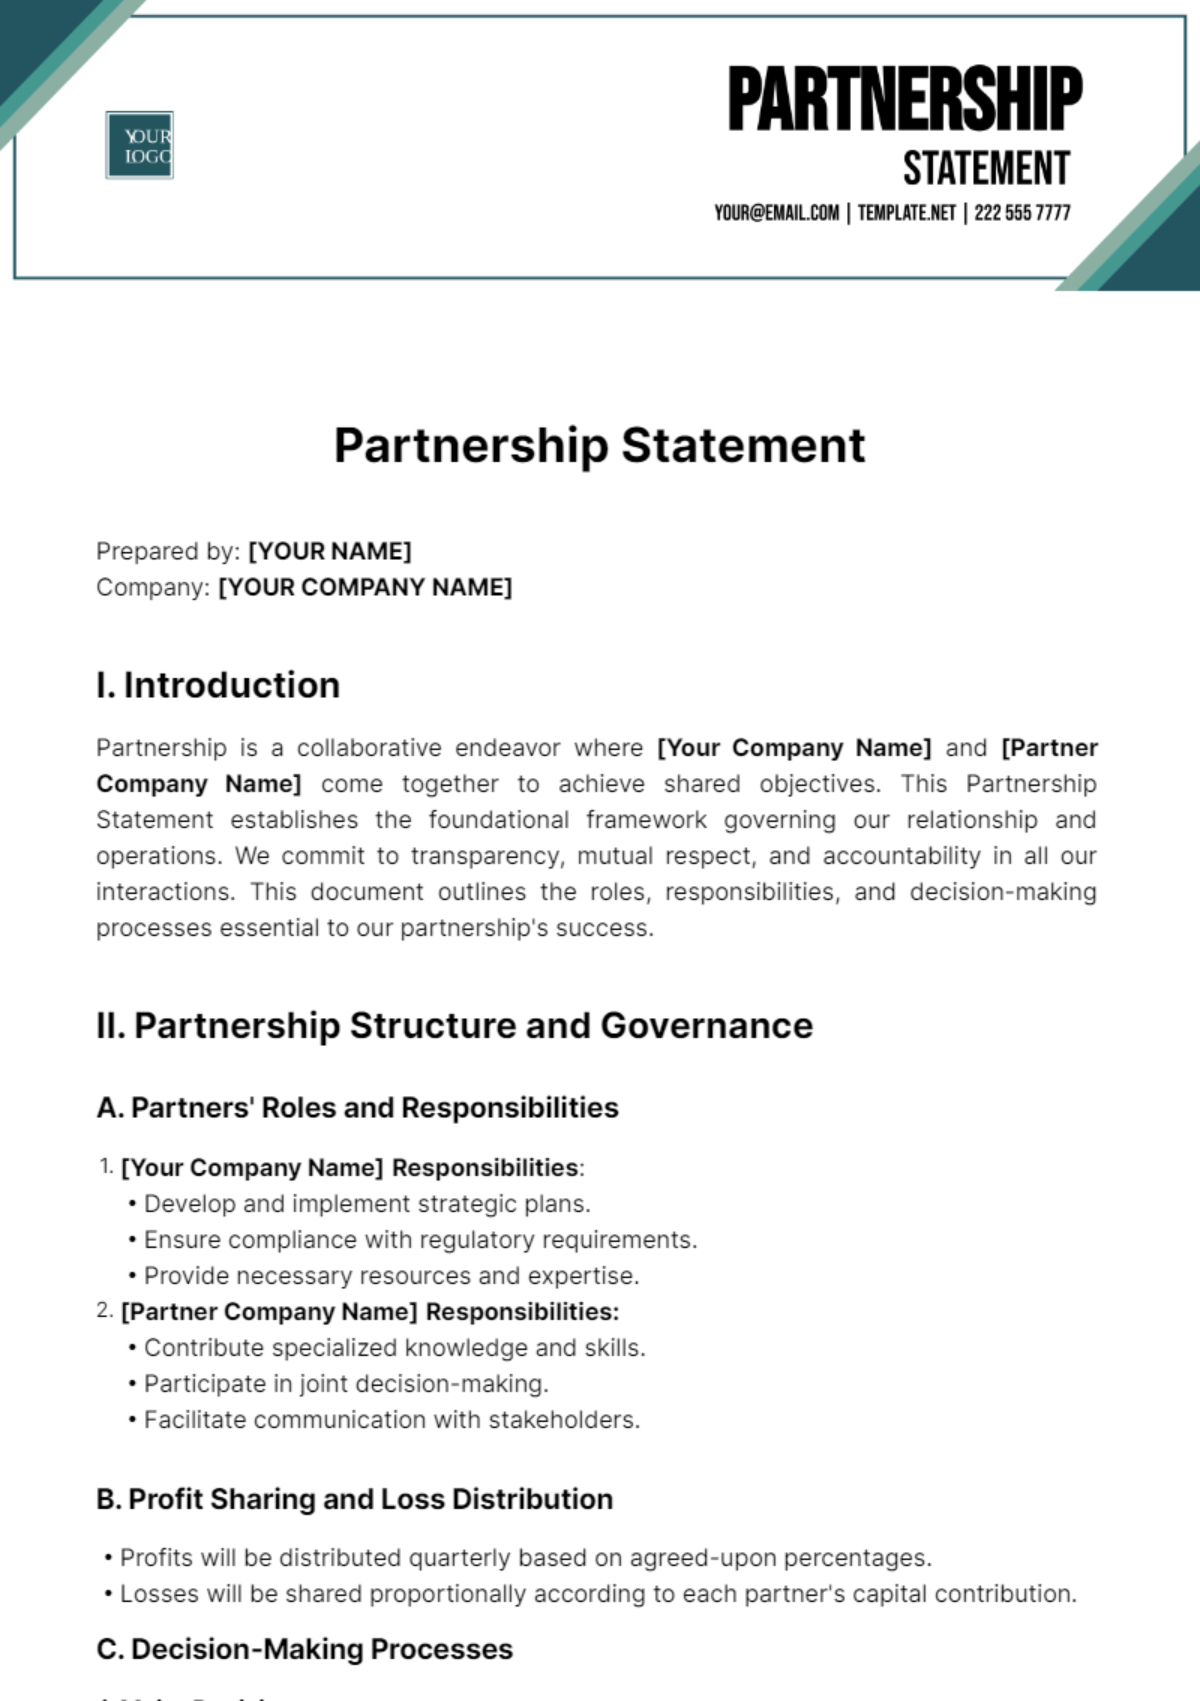 Partnership Statement Template